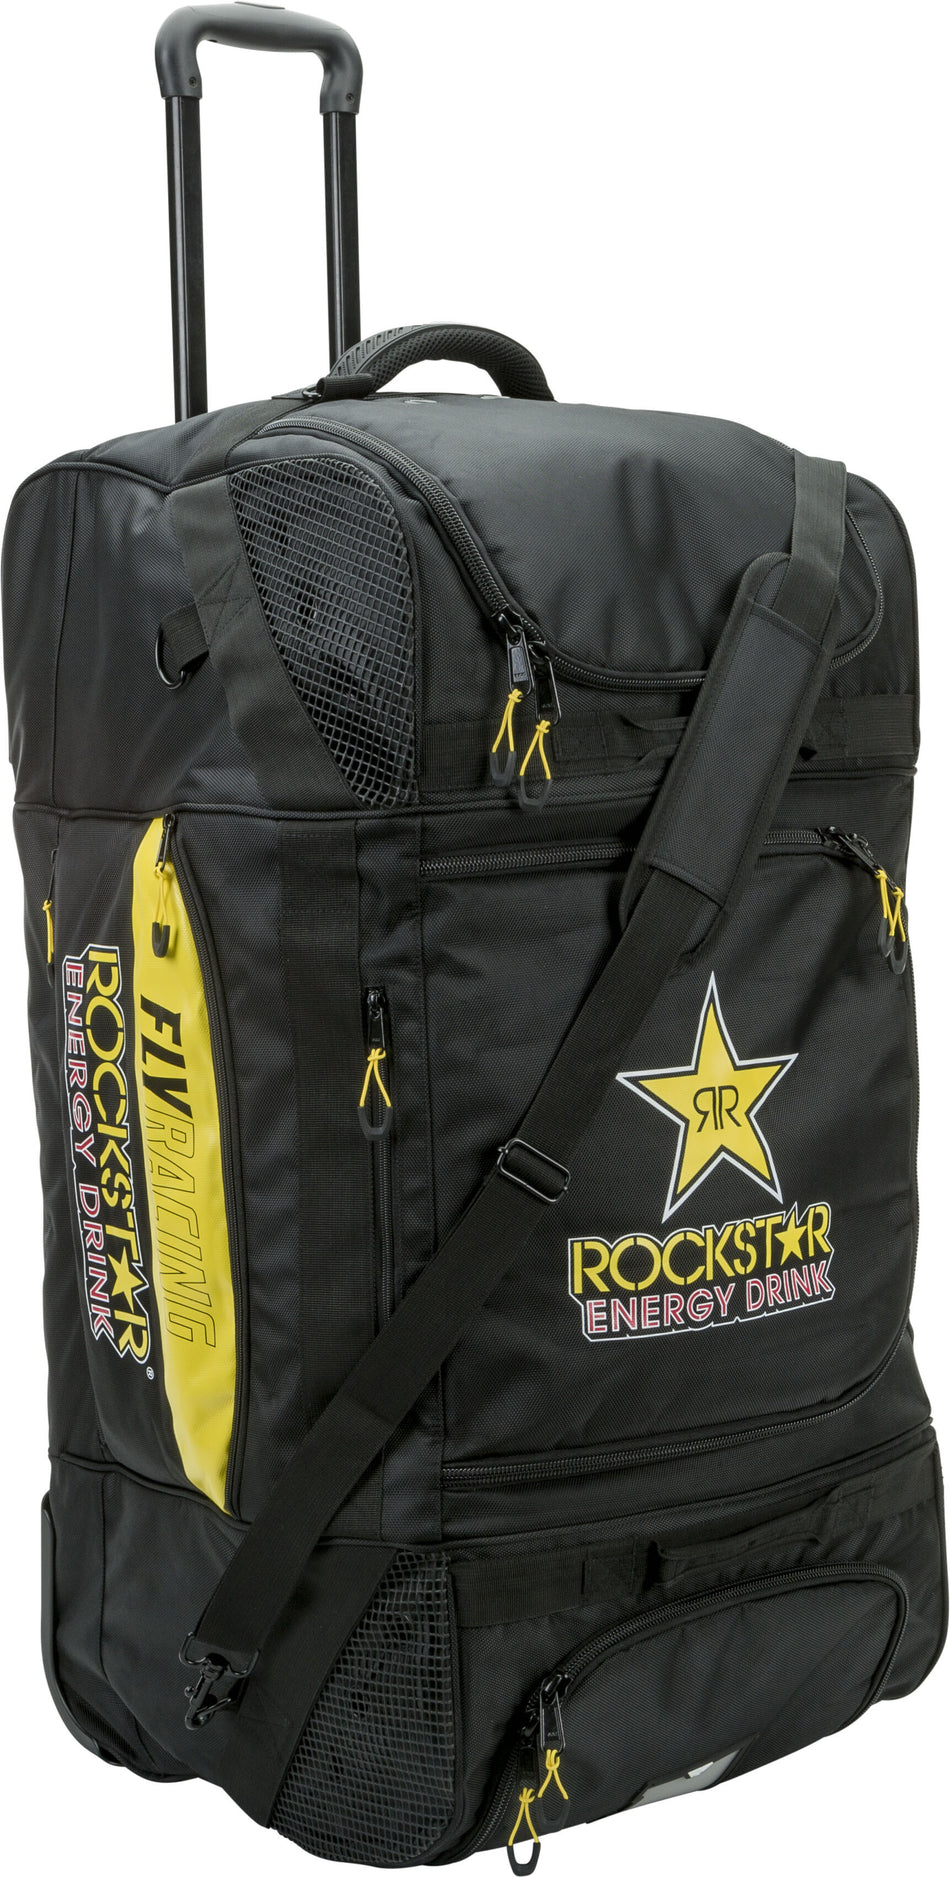 FLY RACING Rockstar Roller Grande Gearbag Black/Yellow 28-5223